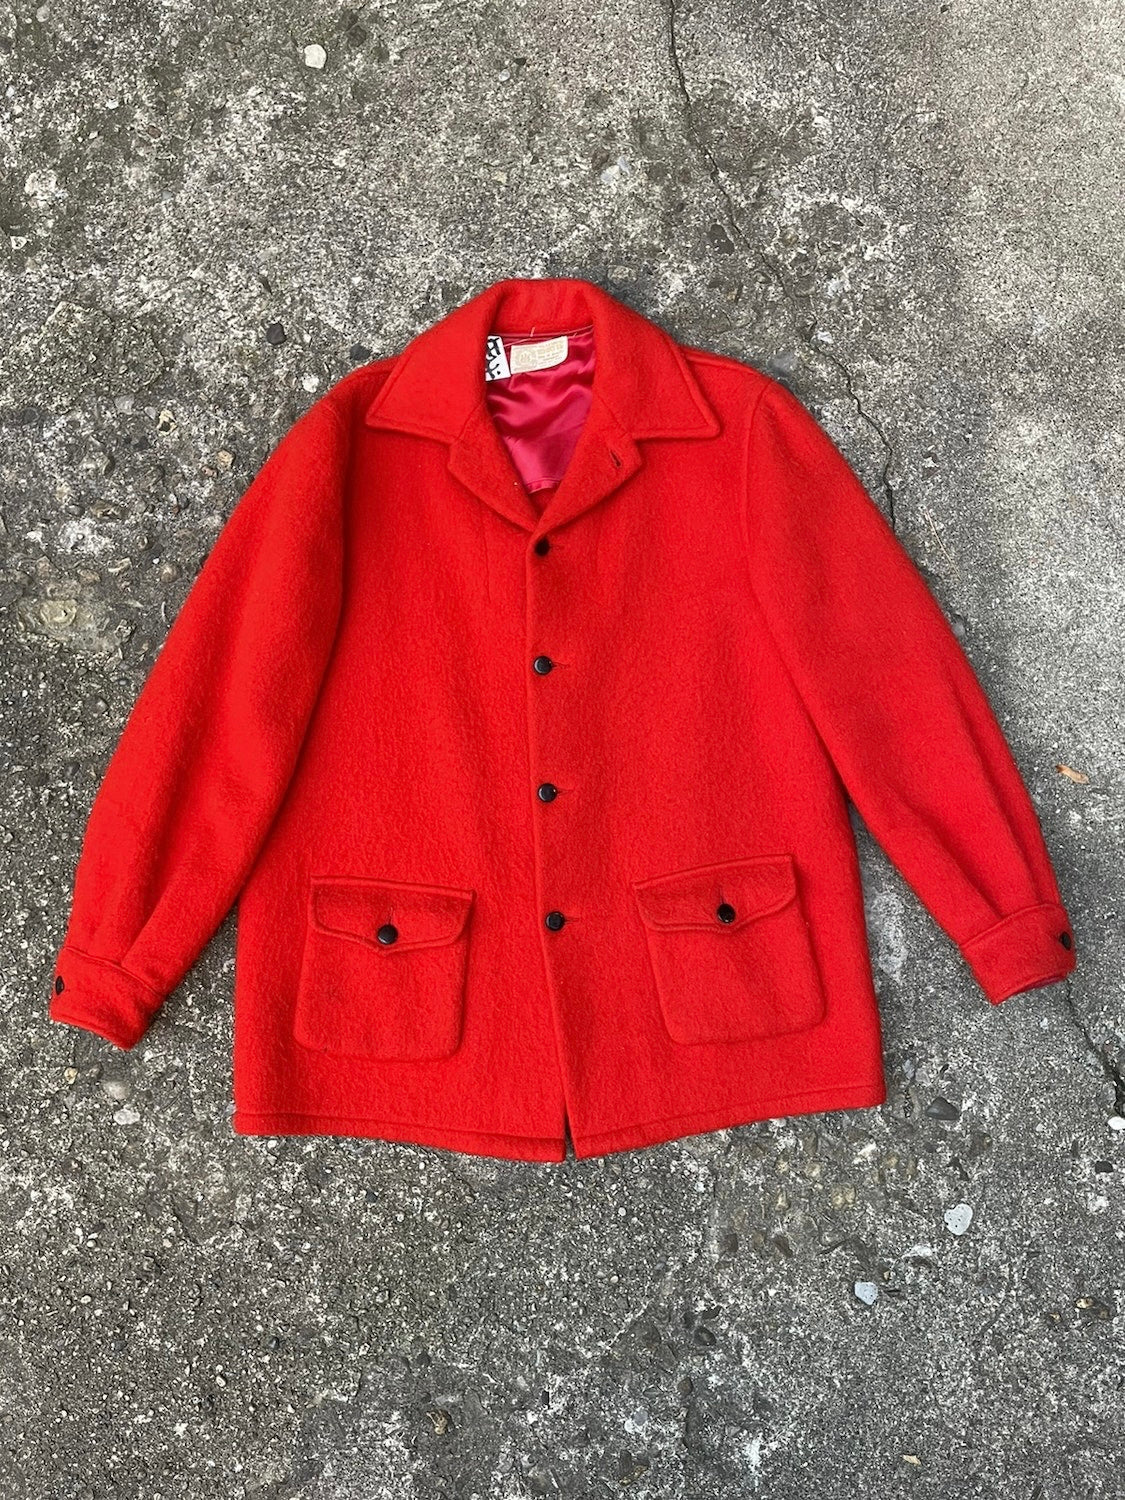 1950’s Hudson’s Bay Co Red Wool Overcoat - M